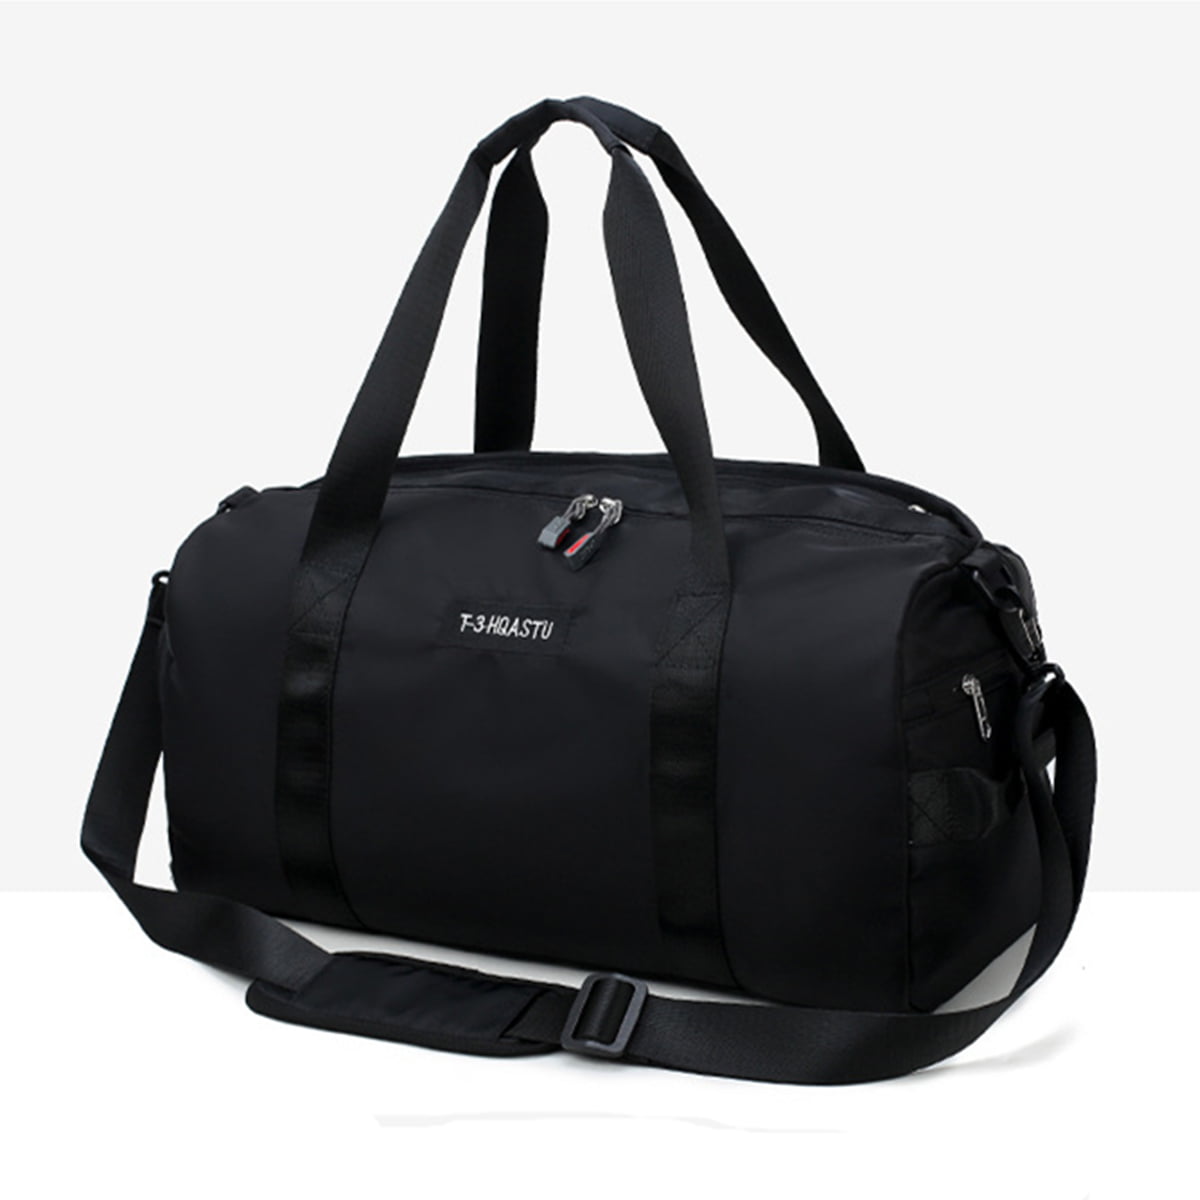 Men Women Hand Luggage Gym Sports Travel Bag Shoulder Bag Weekend Duffle Bag New 